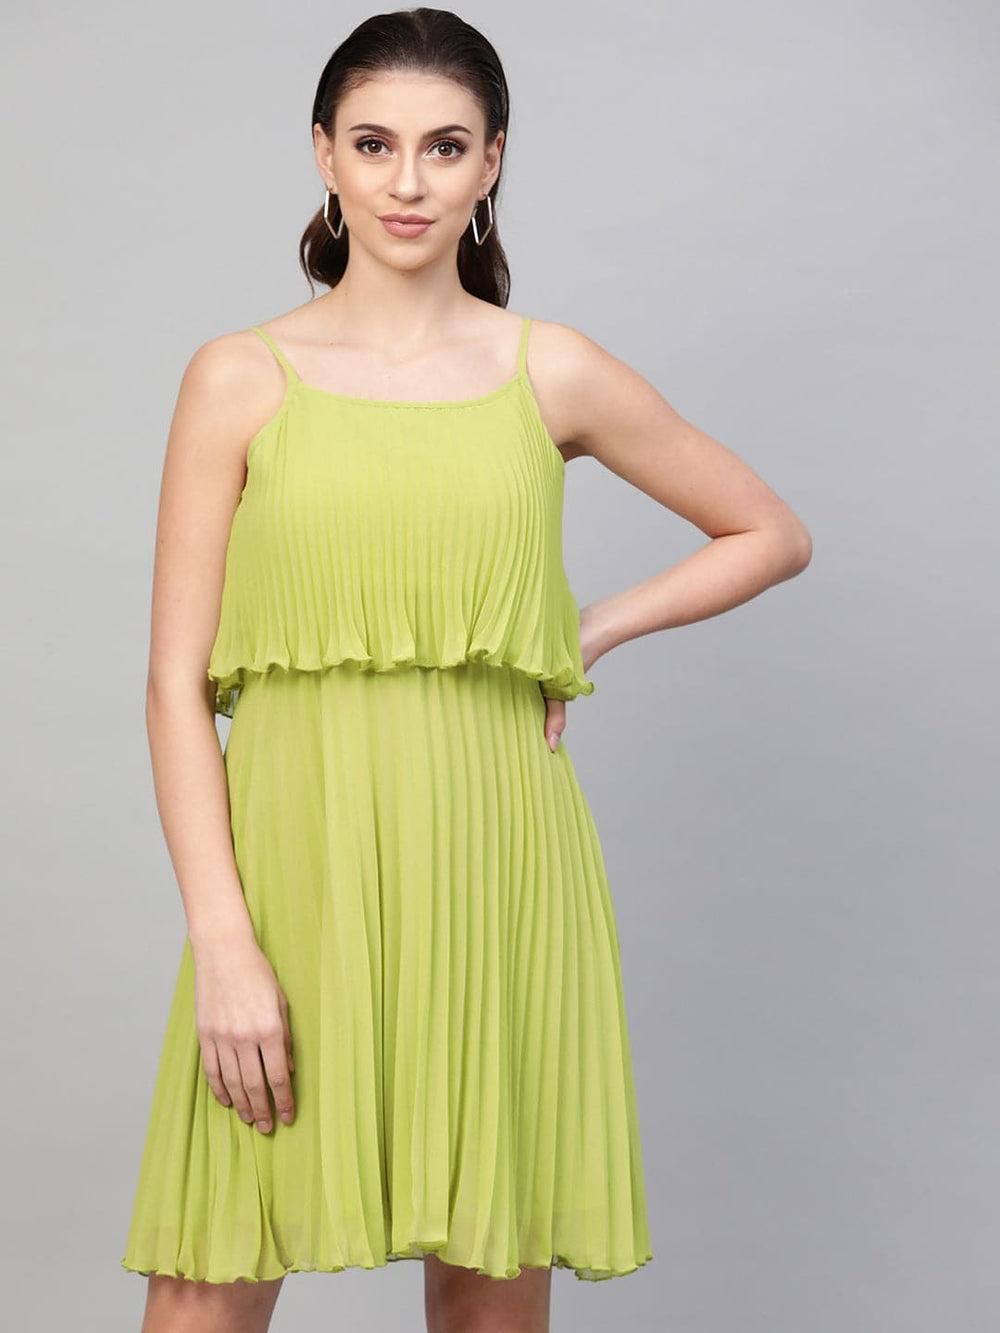 Sassafras Women's Solid Green Pleated Strappy Skater Short Dress